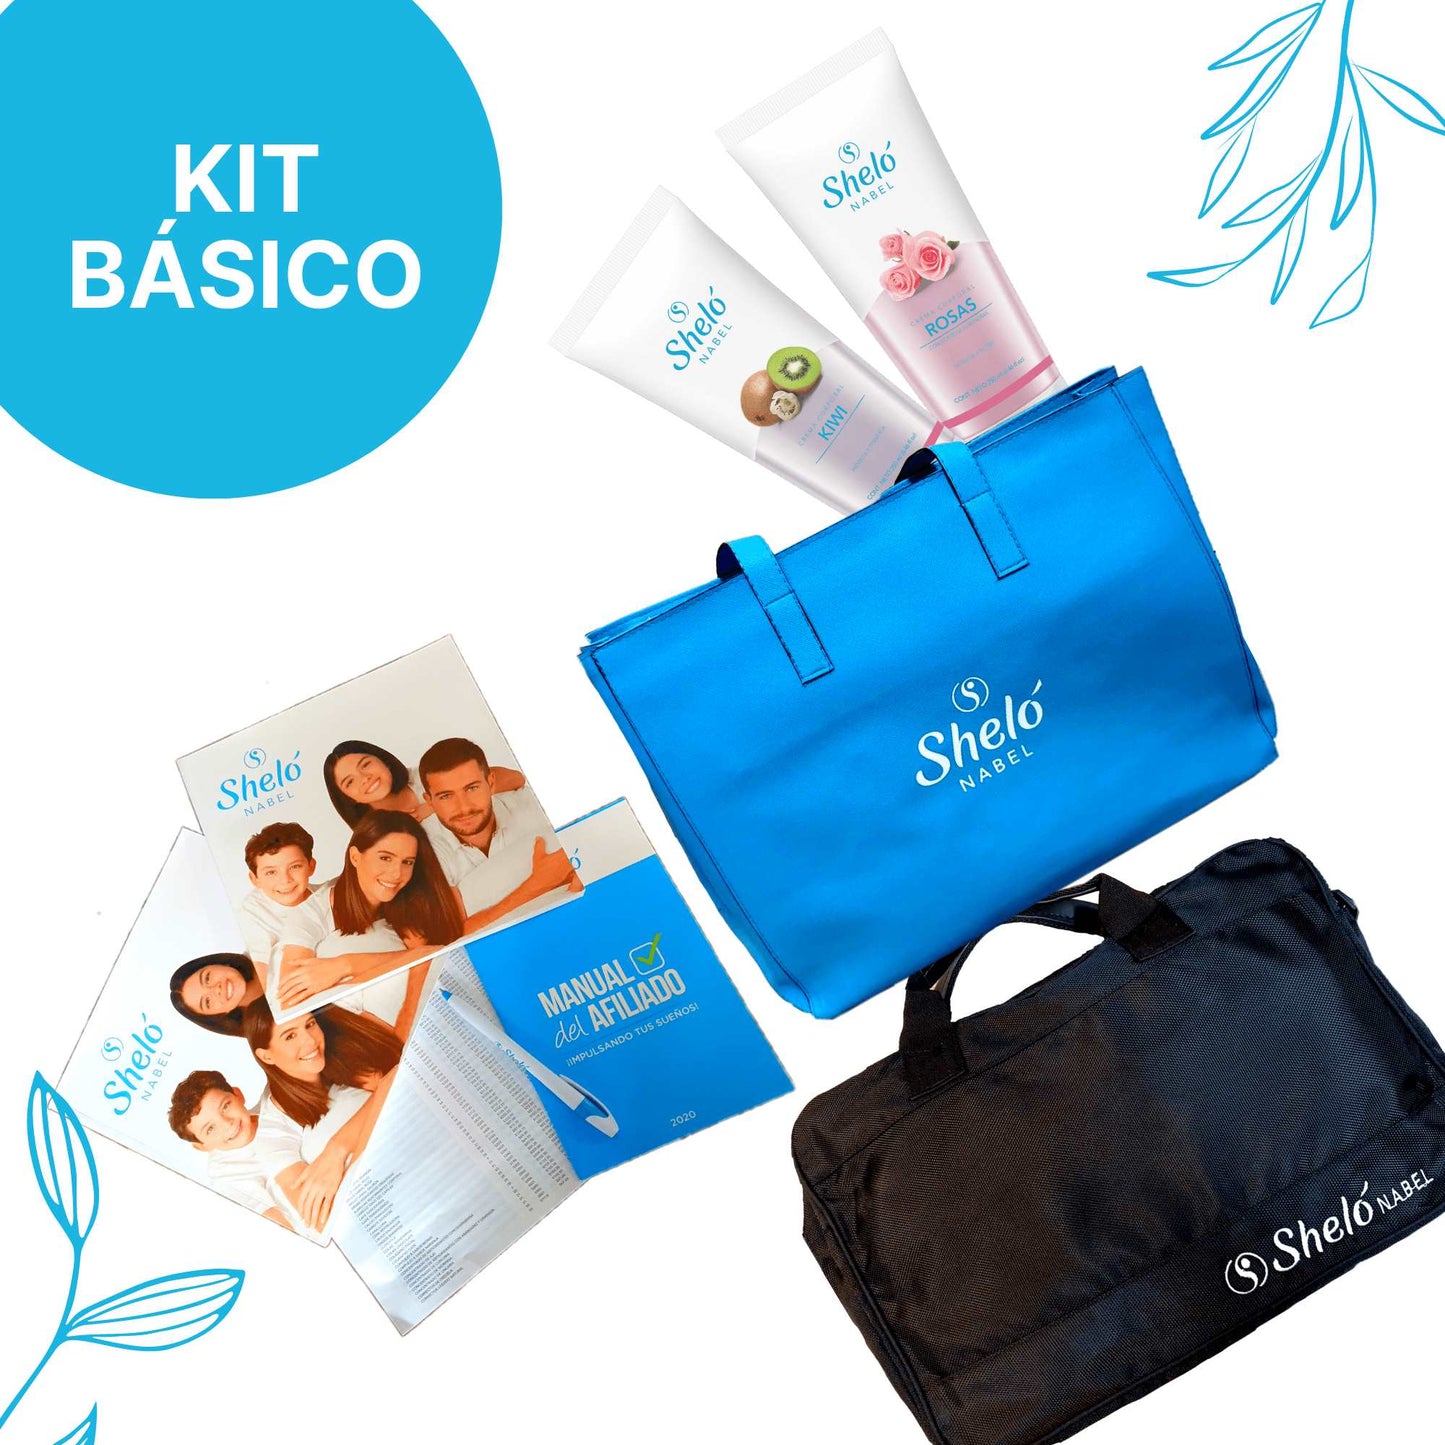 KIT BASICO - Kit de afiliación Sheló NABEL